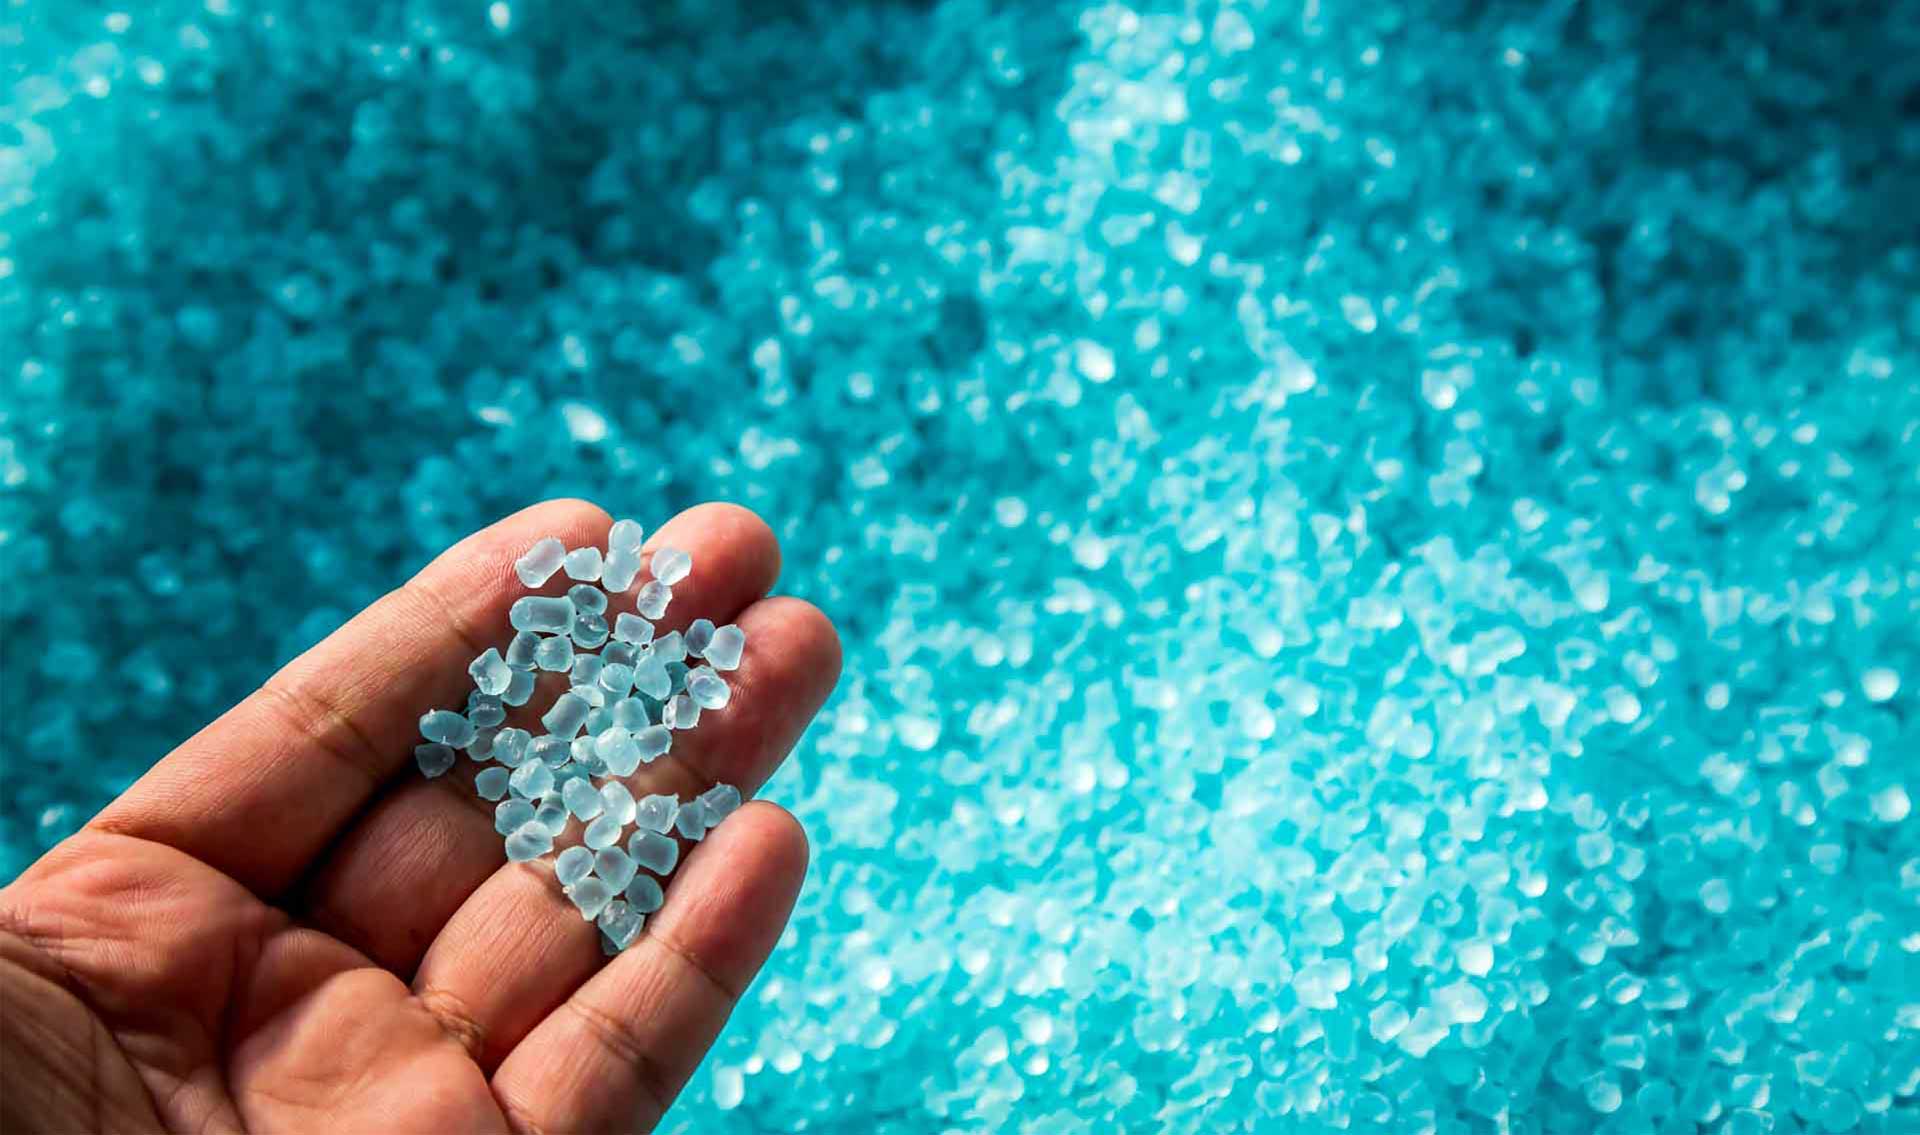 Hand-holding-blue-translucent-plastic-pellets